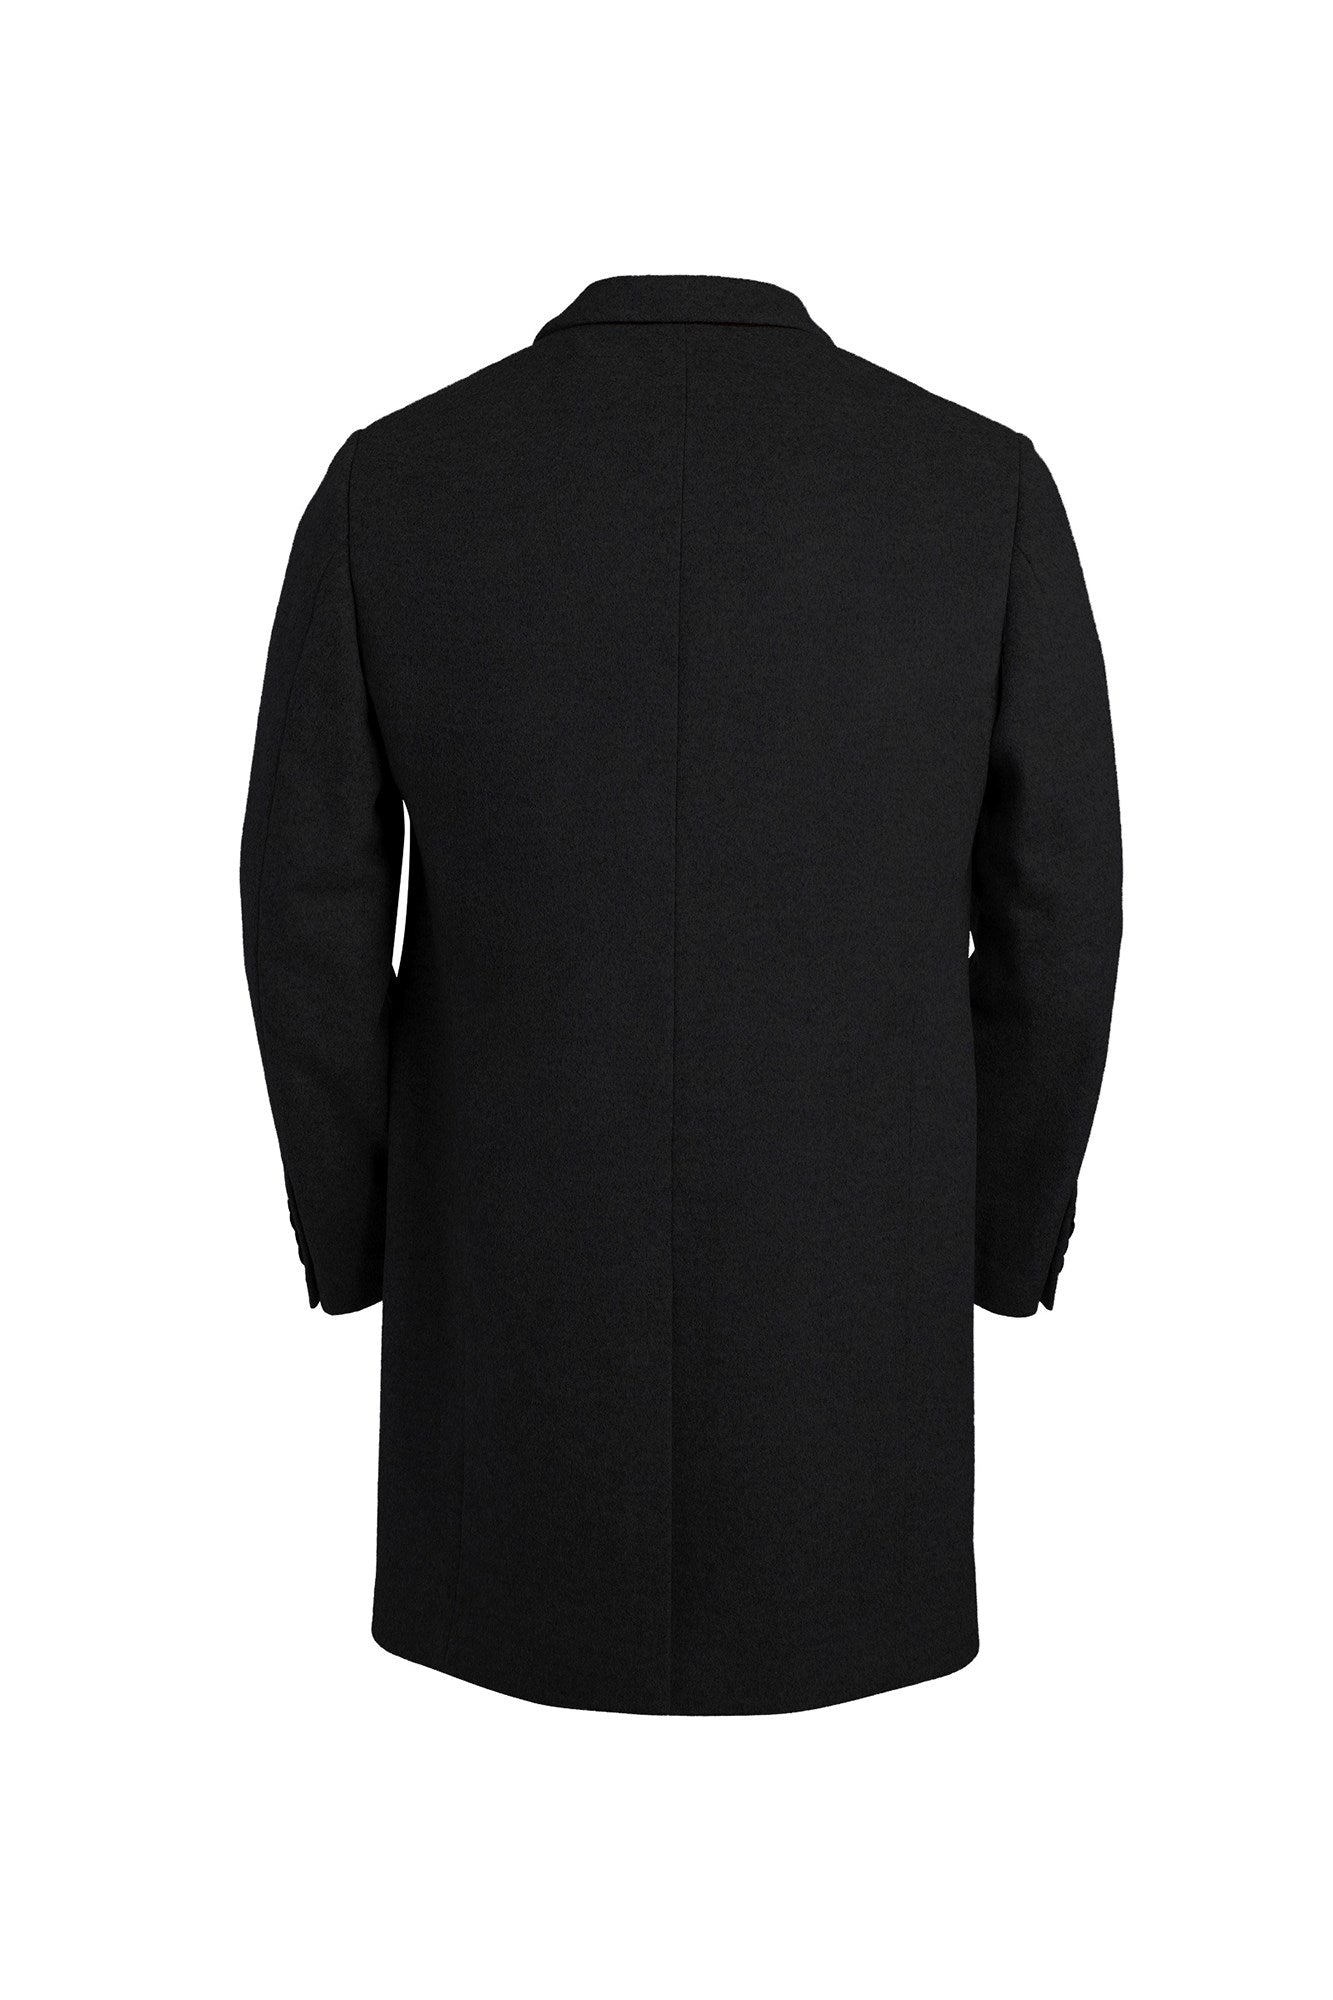 SUTTON BLACK WOOL OVERCOAT - Dress - Cardinal of Canada-CA - BLACK WOOL SUTTON topcoat 38 inch length